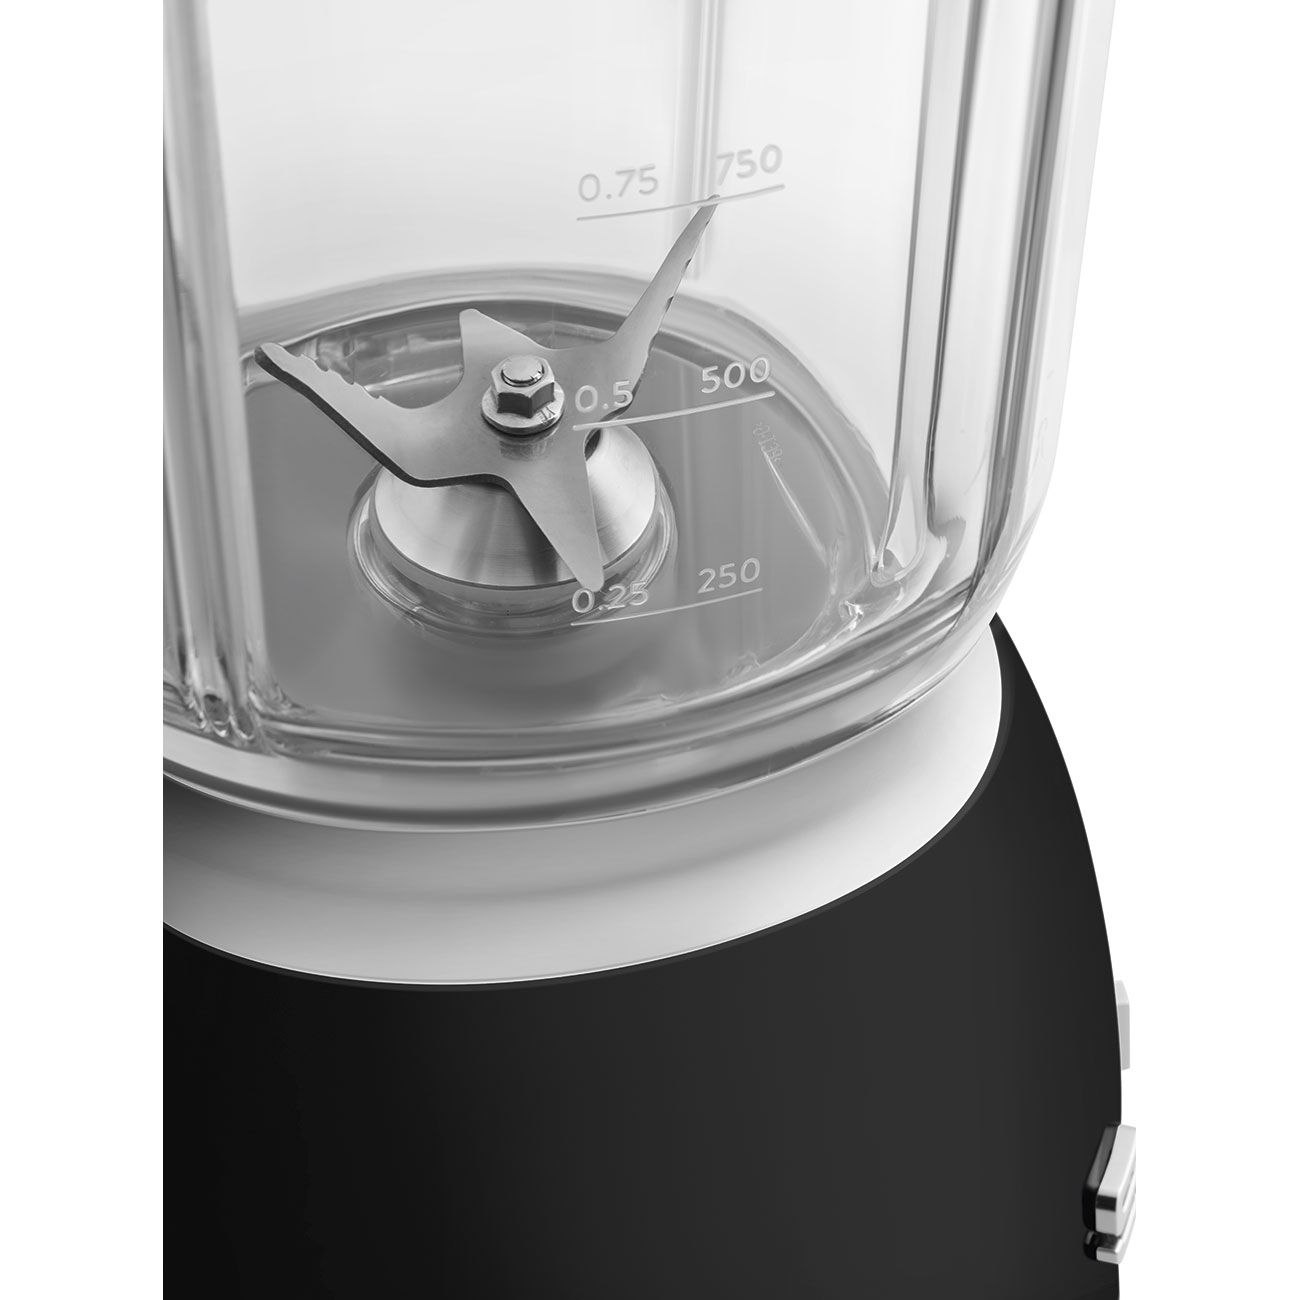 Black jug blender by Smeg - BLF03BLUK_7